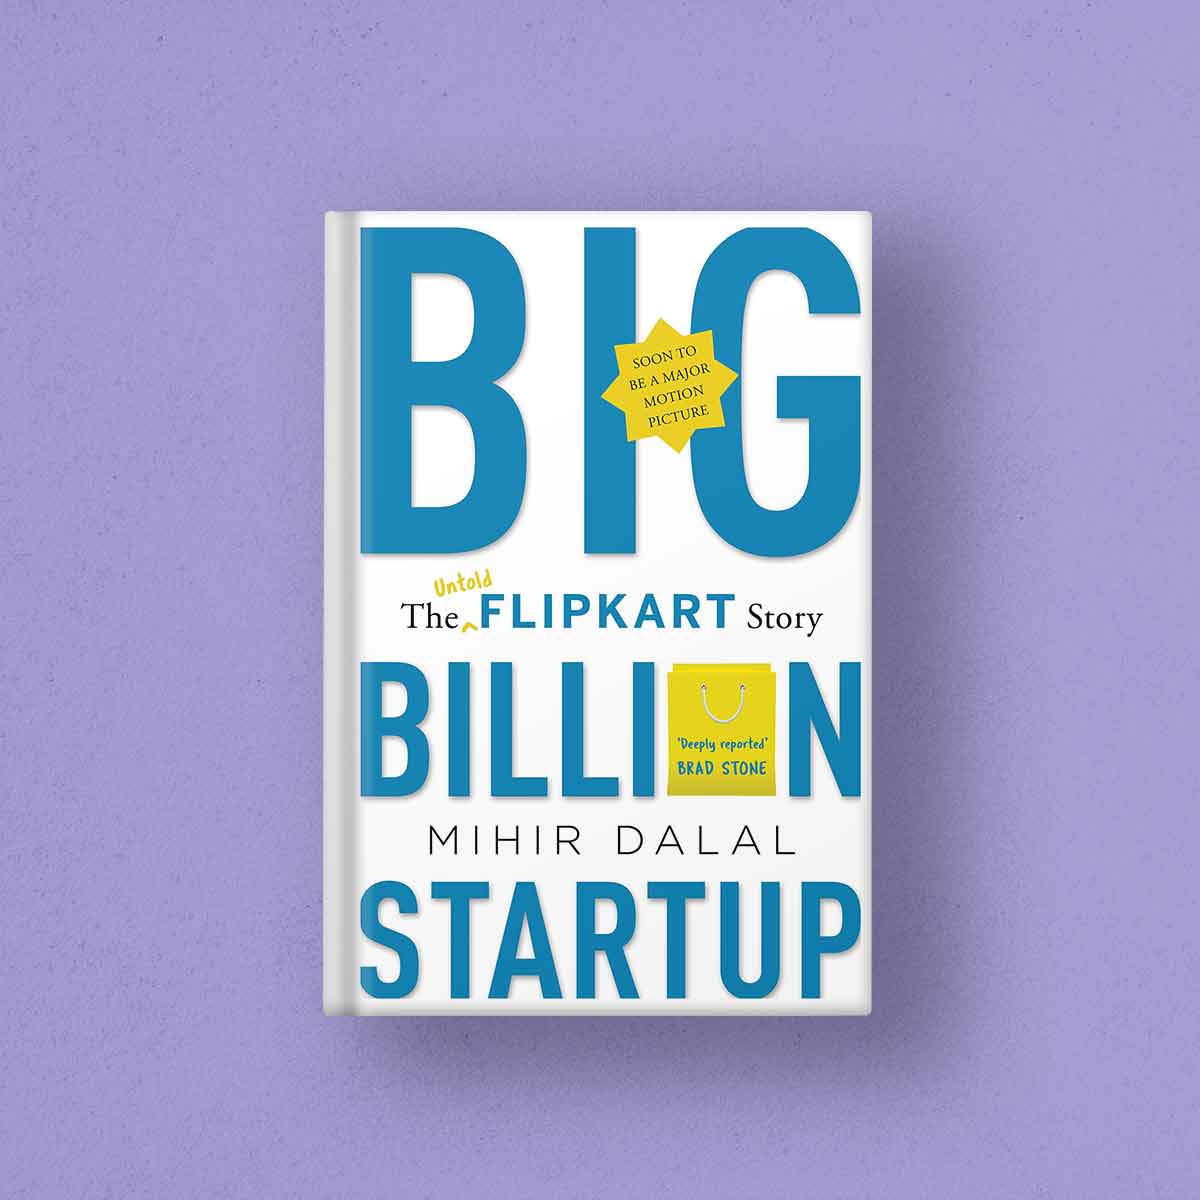 BIG BILLION STARTUP - THE UNTOLD FLIPKART STORY